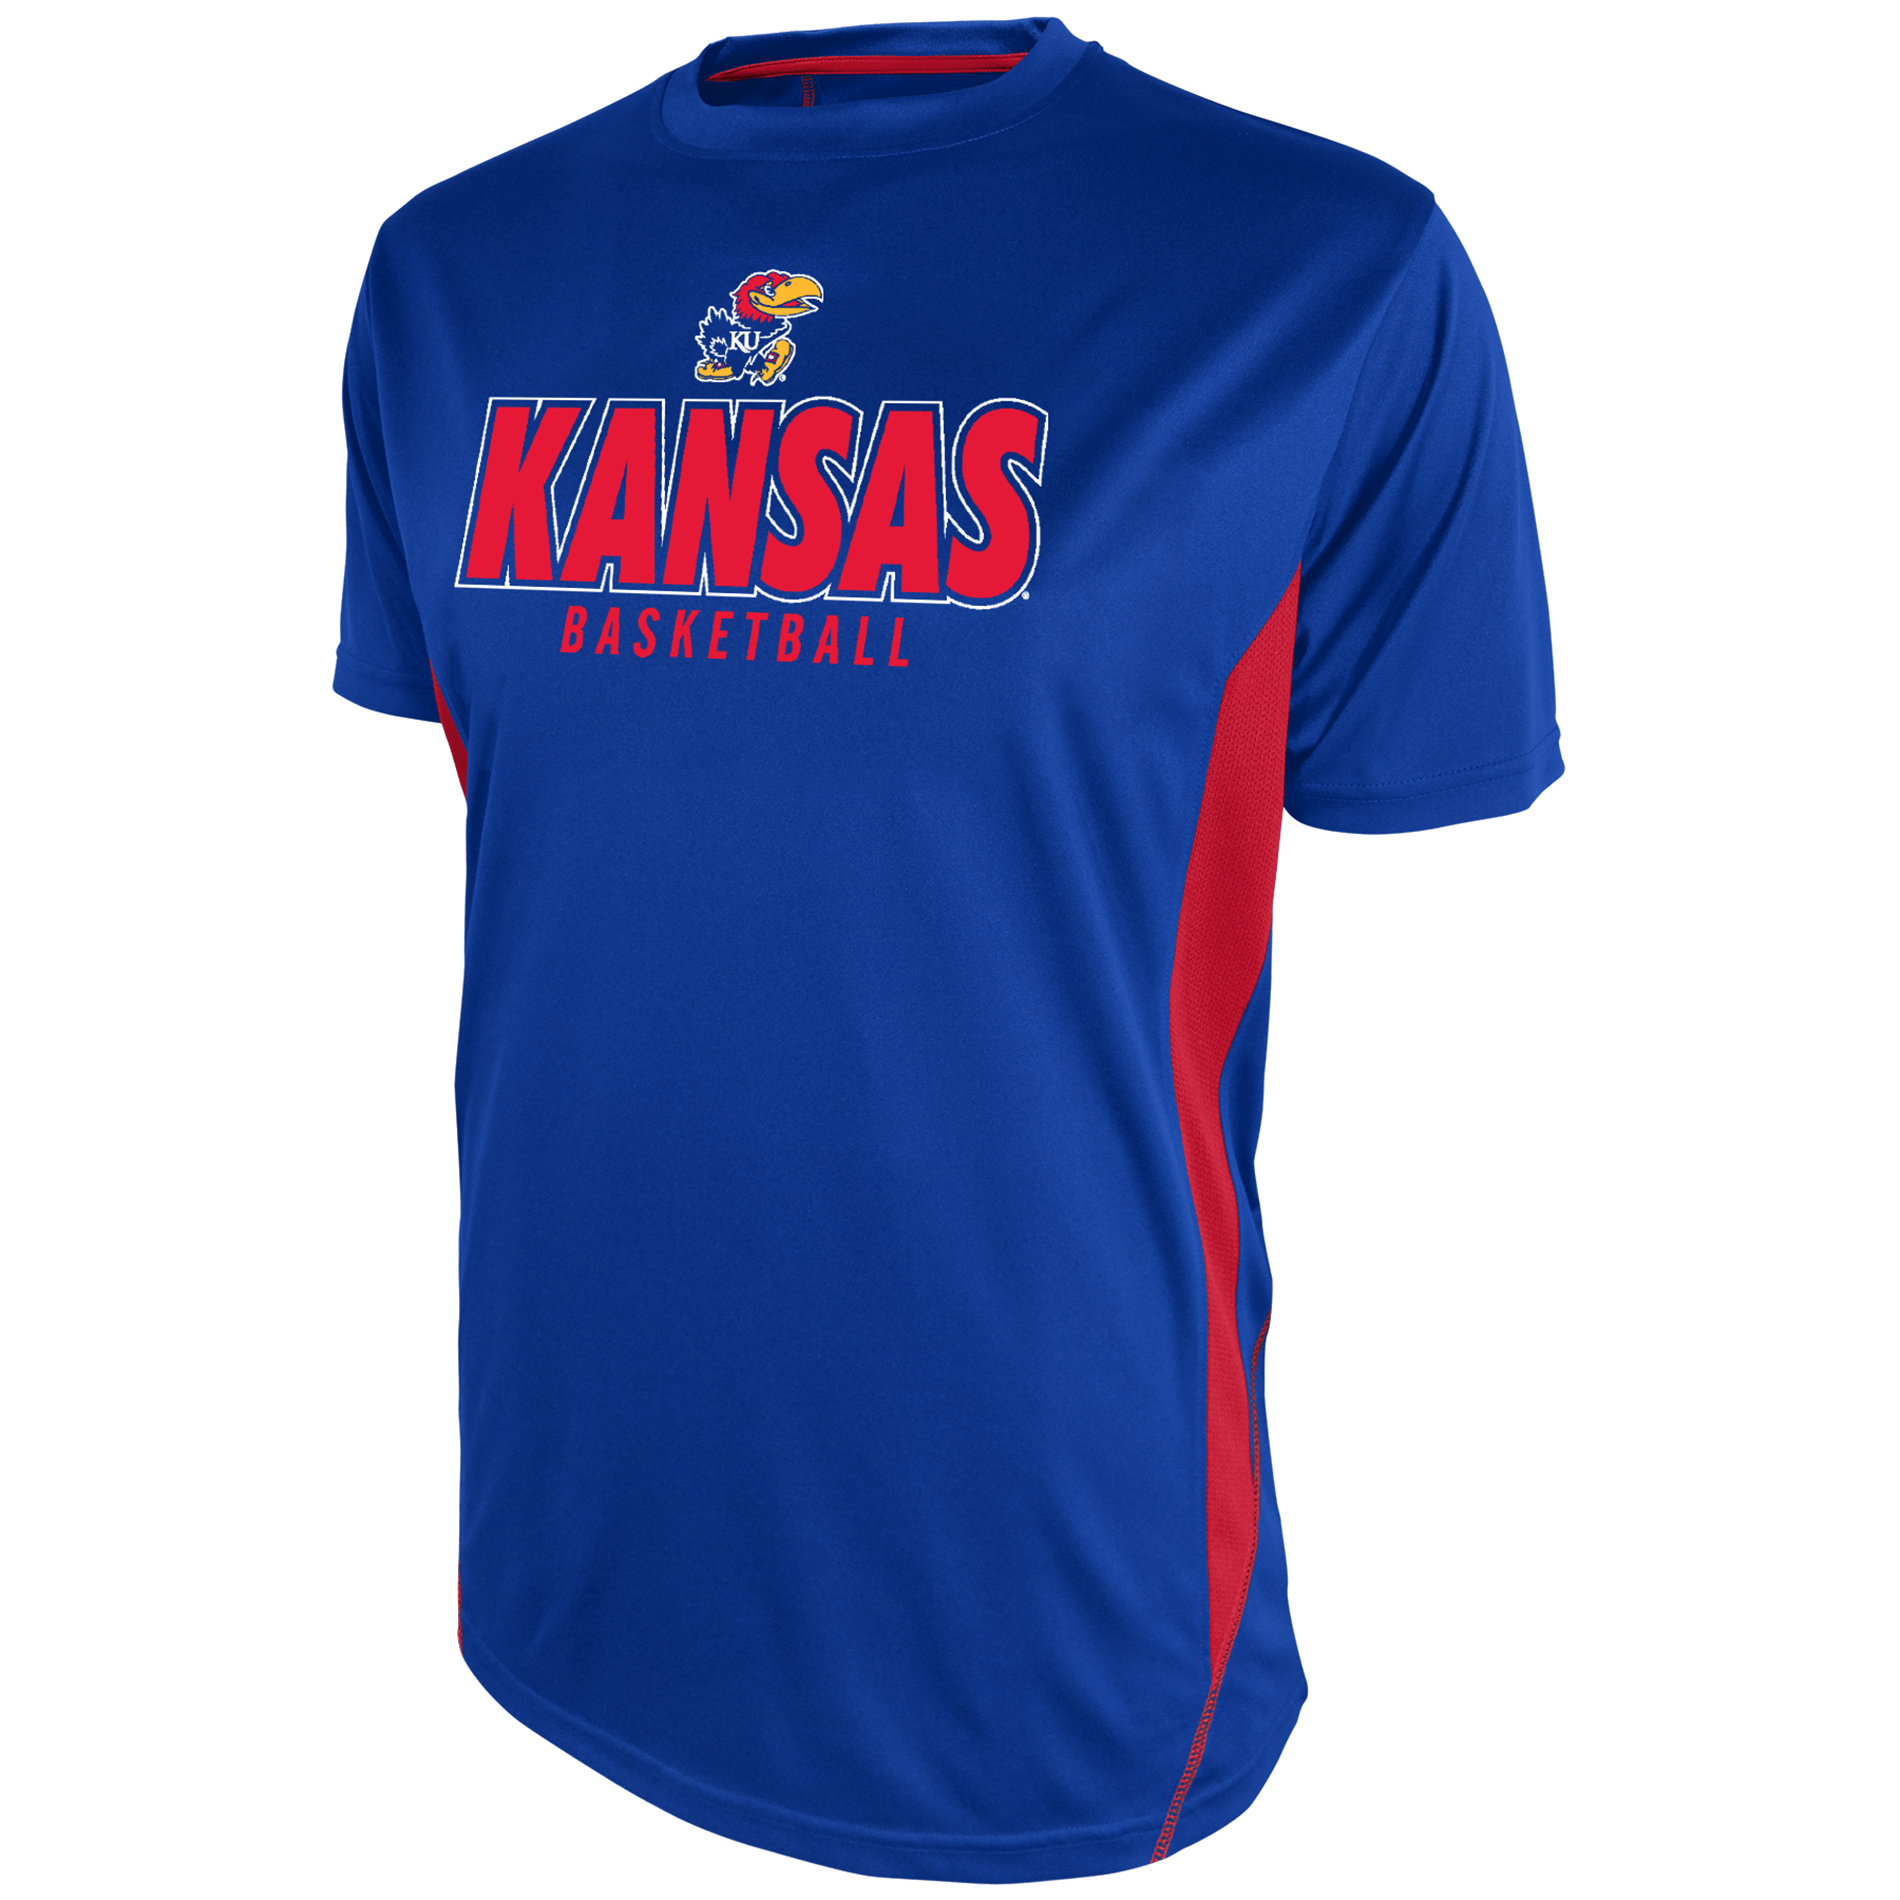 NCAA Mens' Kansas Jayhawks Short Sleeve Athletic Tee